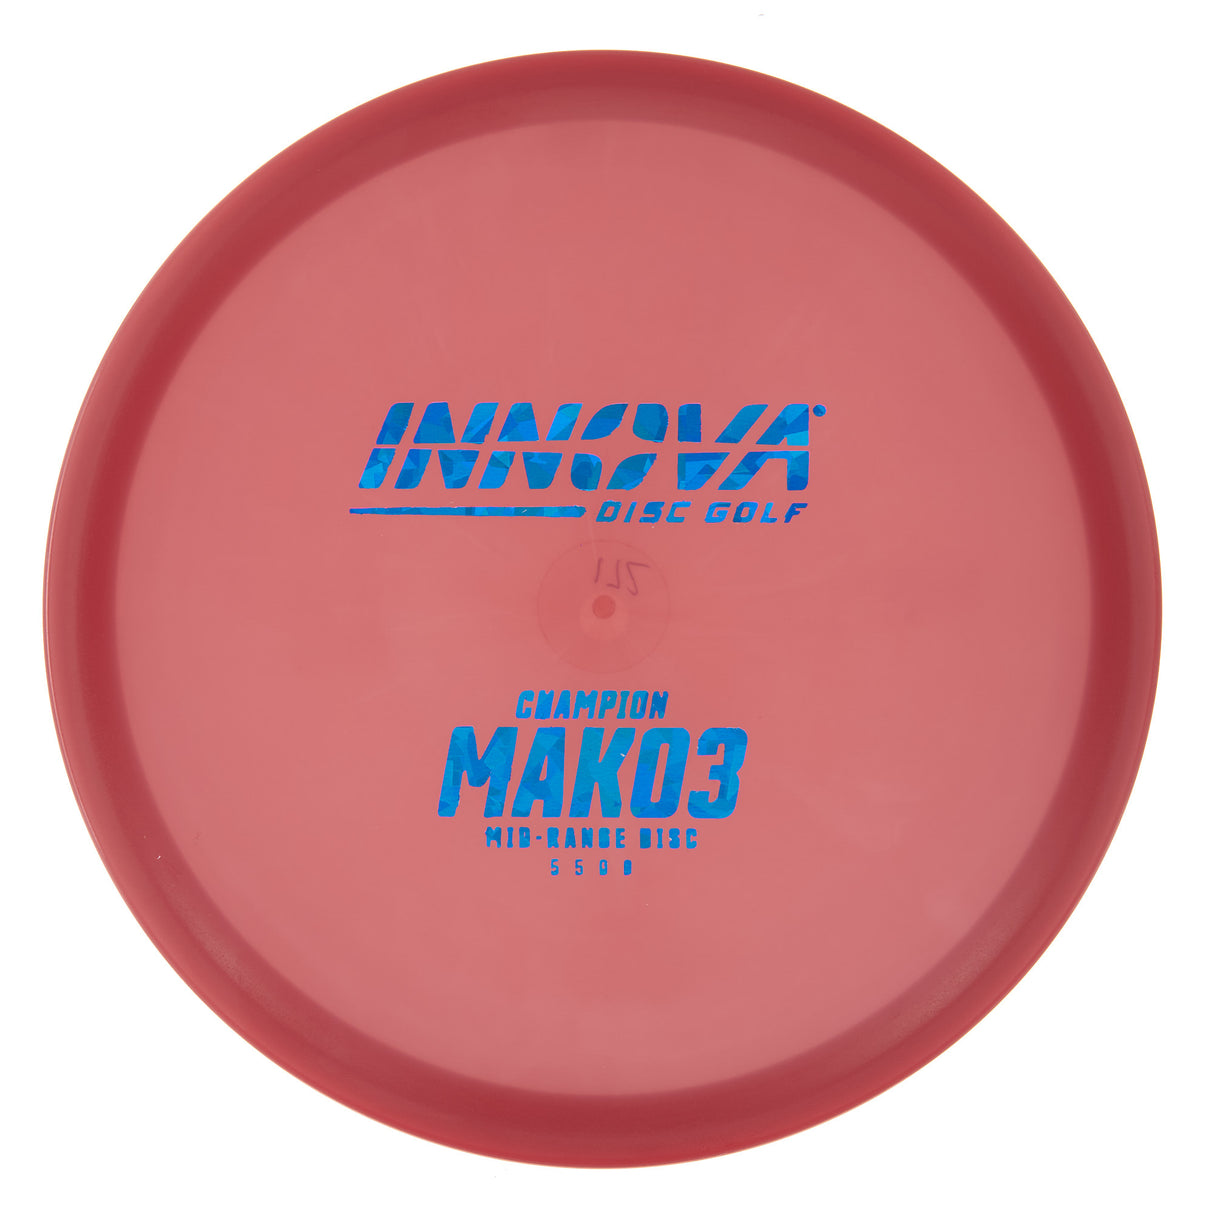 Innova Mako3 - Champion 173g | Style 0003